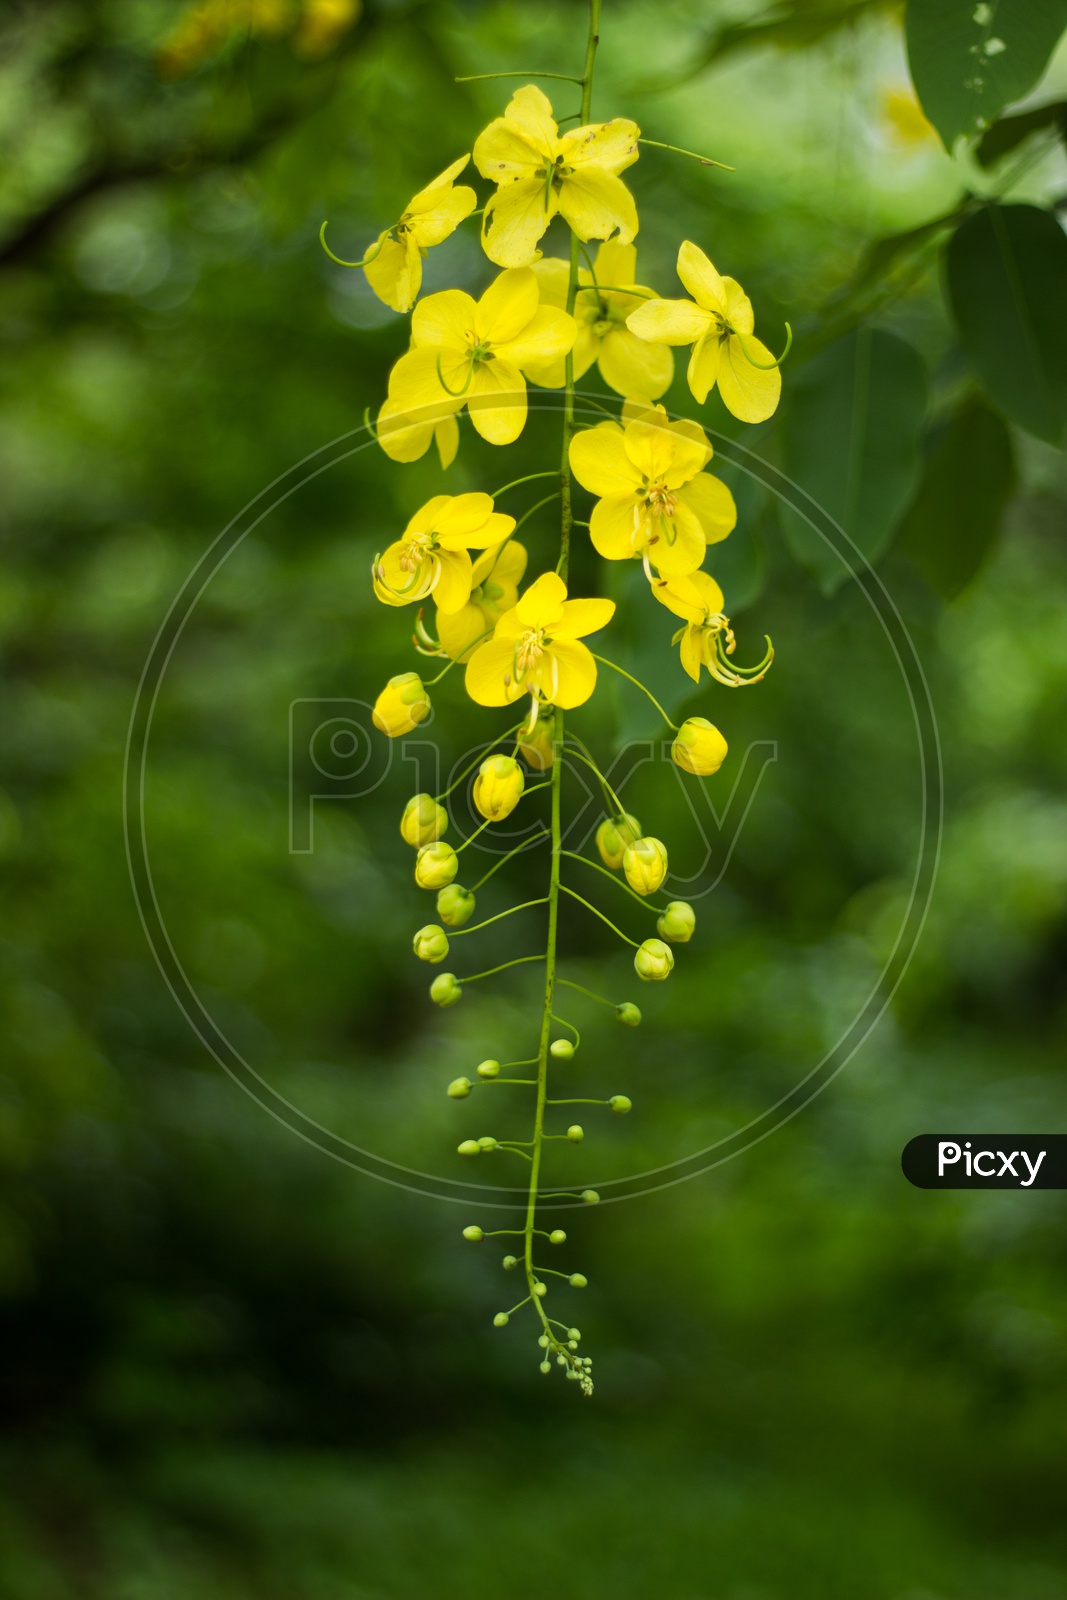 Cassia fistula or Amaltas or Golden shower tree flowers in full bloom during monsoon season